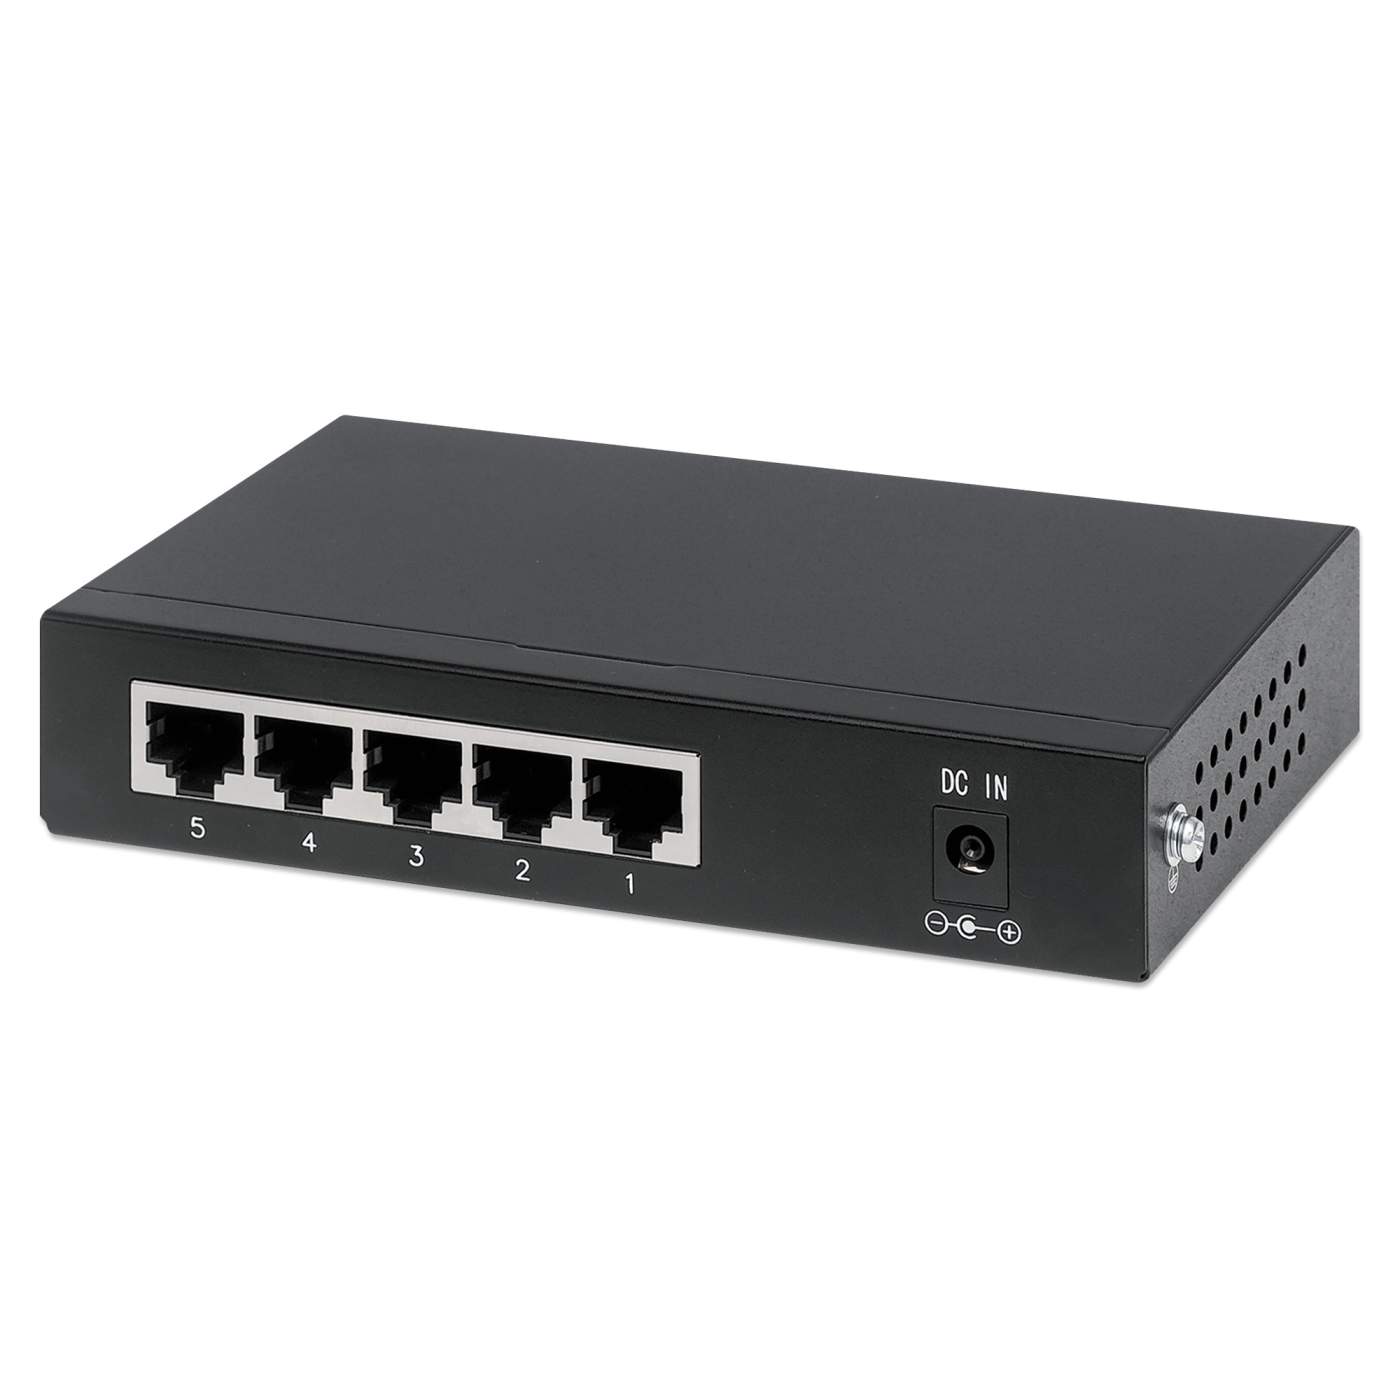 5 port Gigabit Ethernet Switch, Black w/ Red, IEEE 802.3az